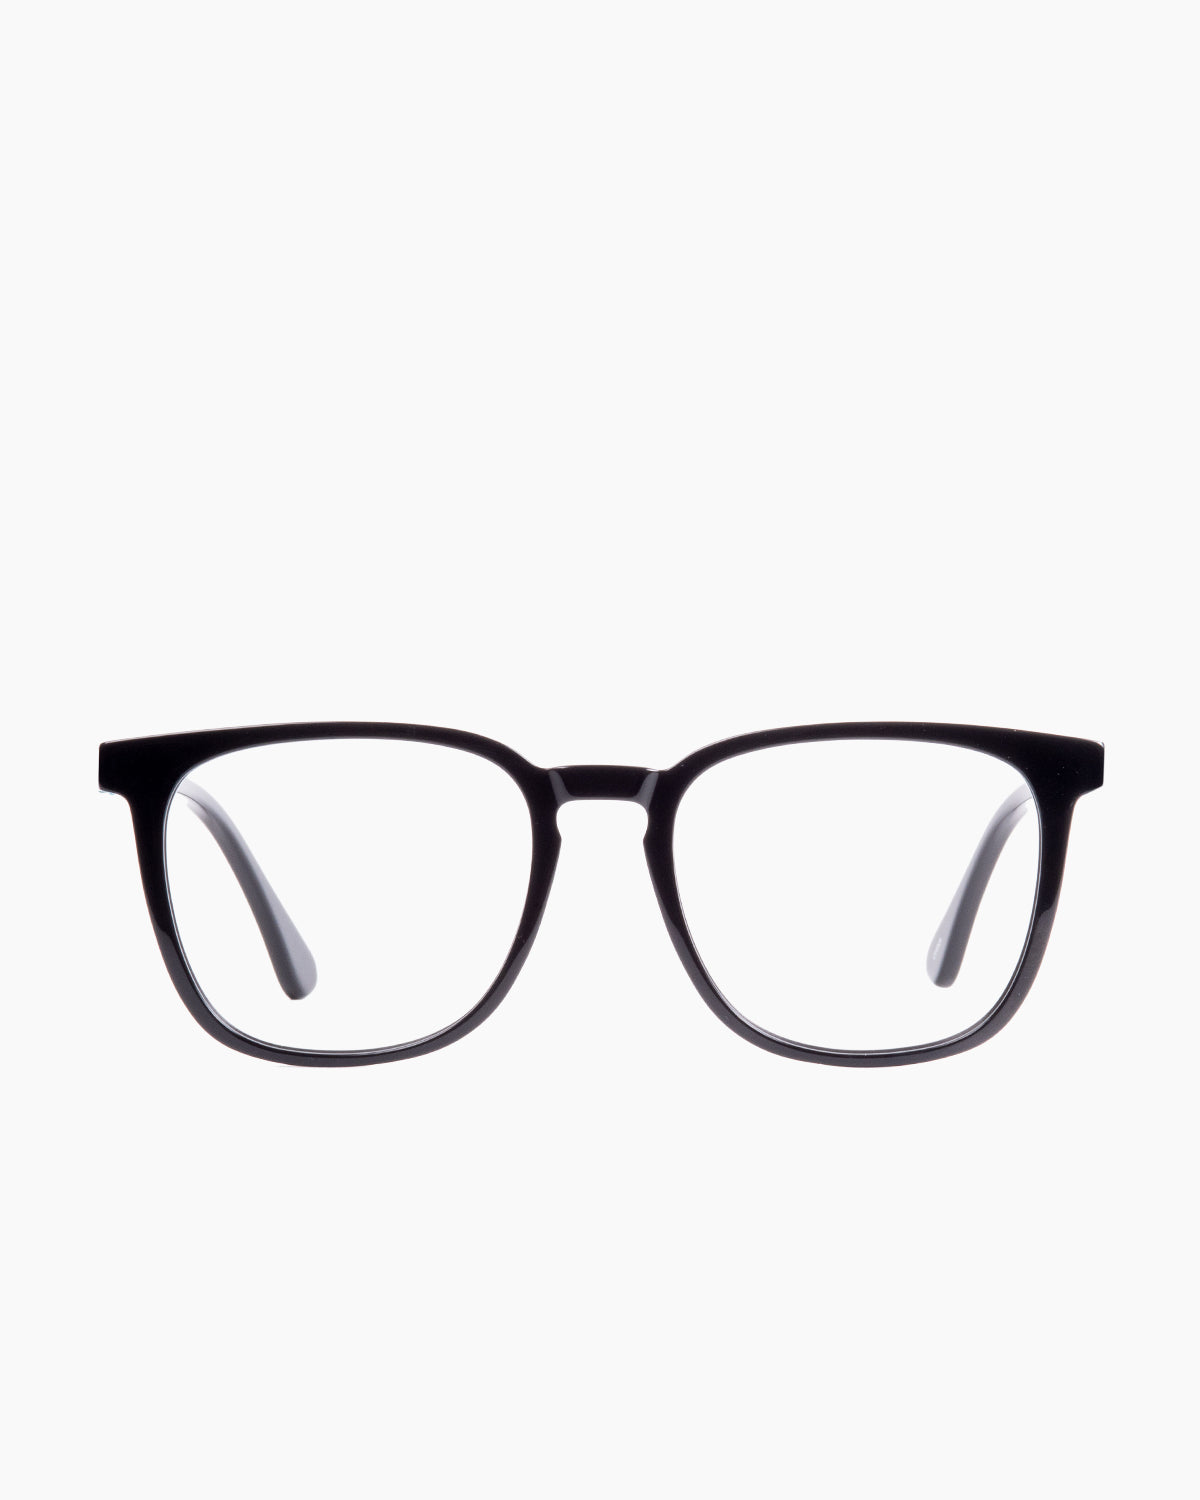 Evolve - Rob - 10 | Bar à lunettes:  Marie-Sophie Dion